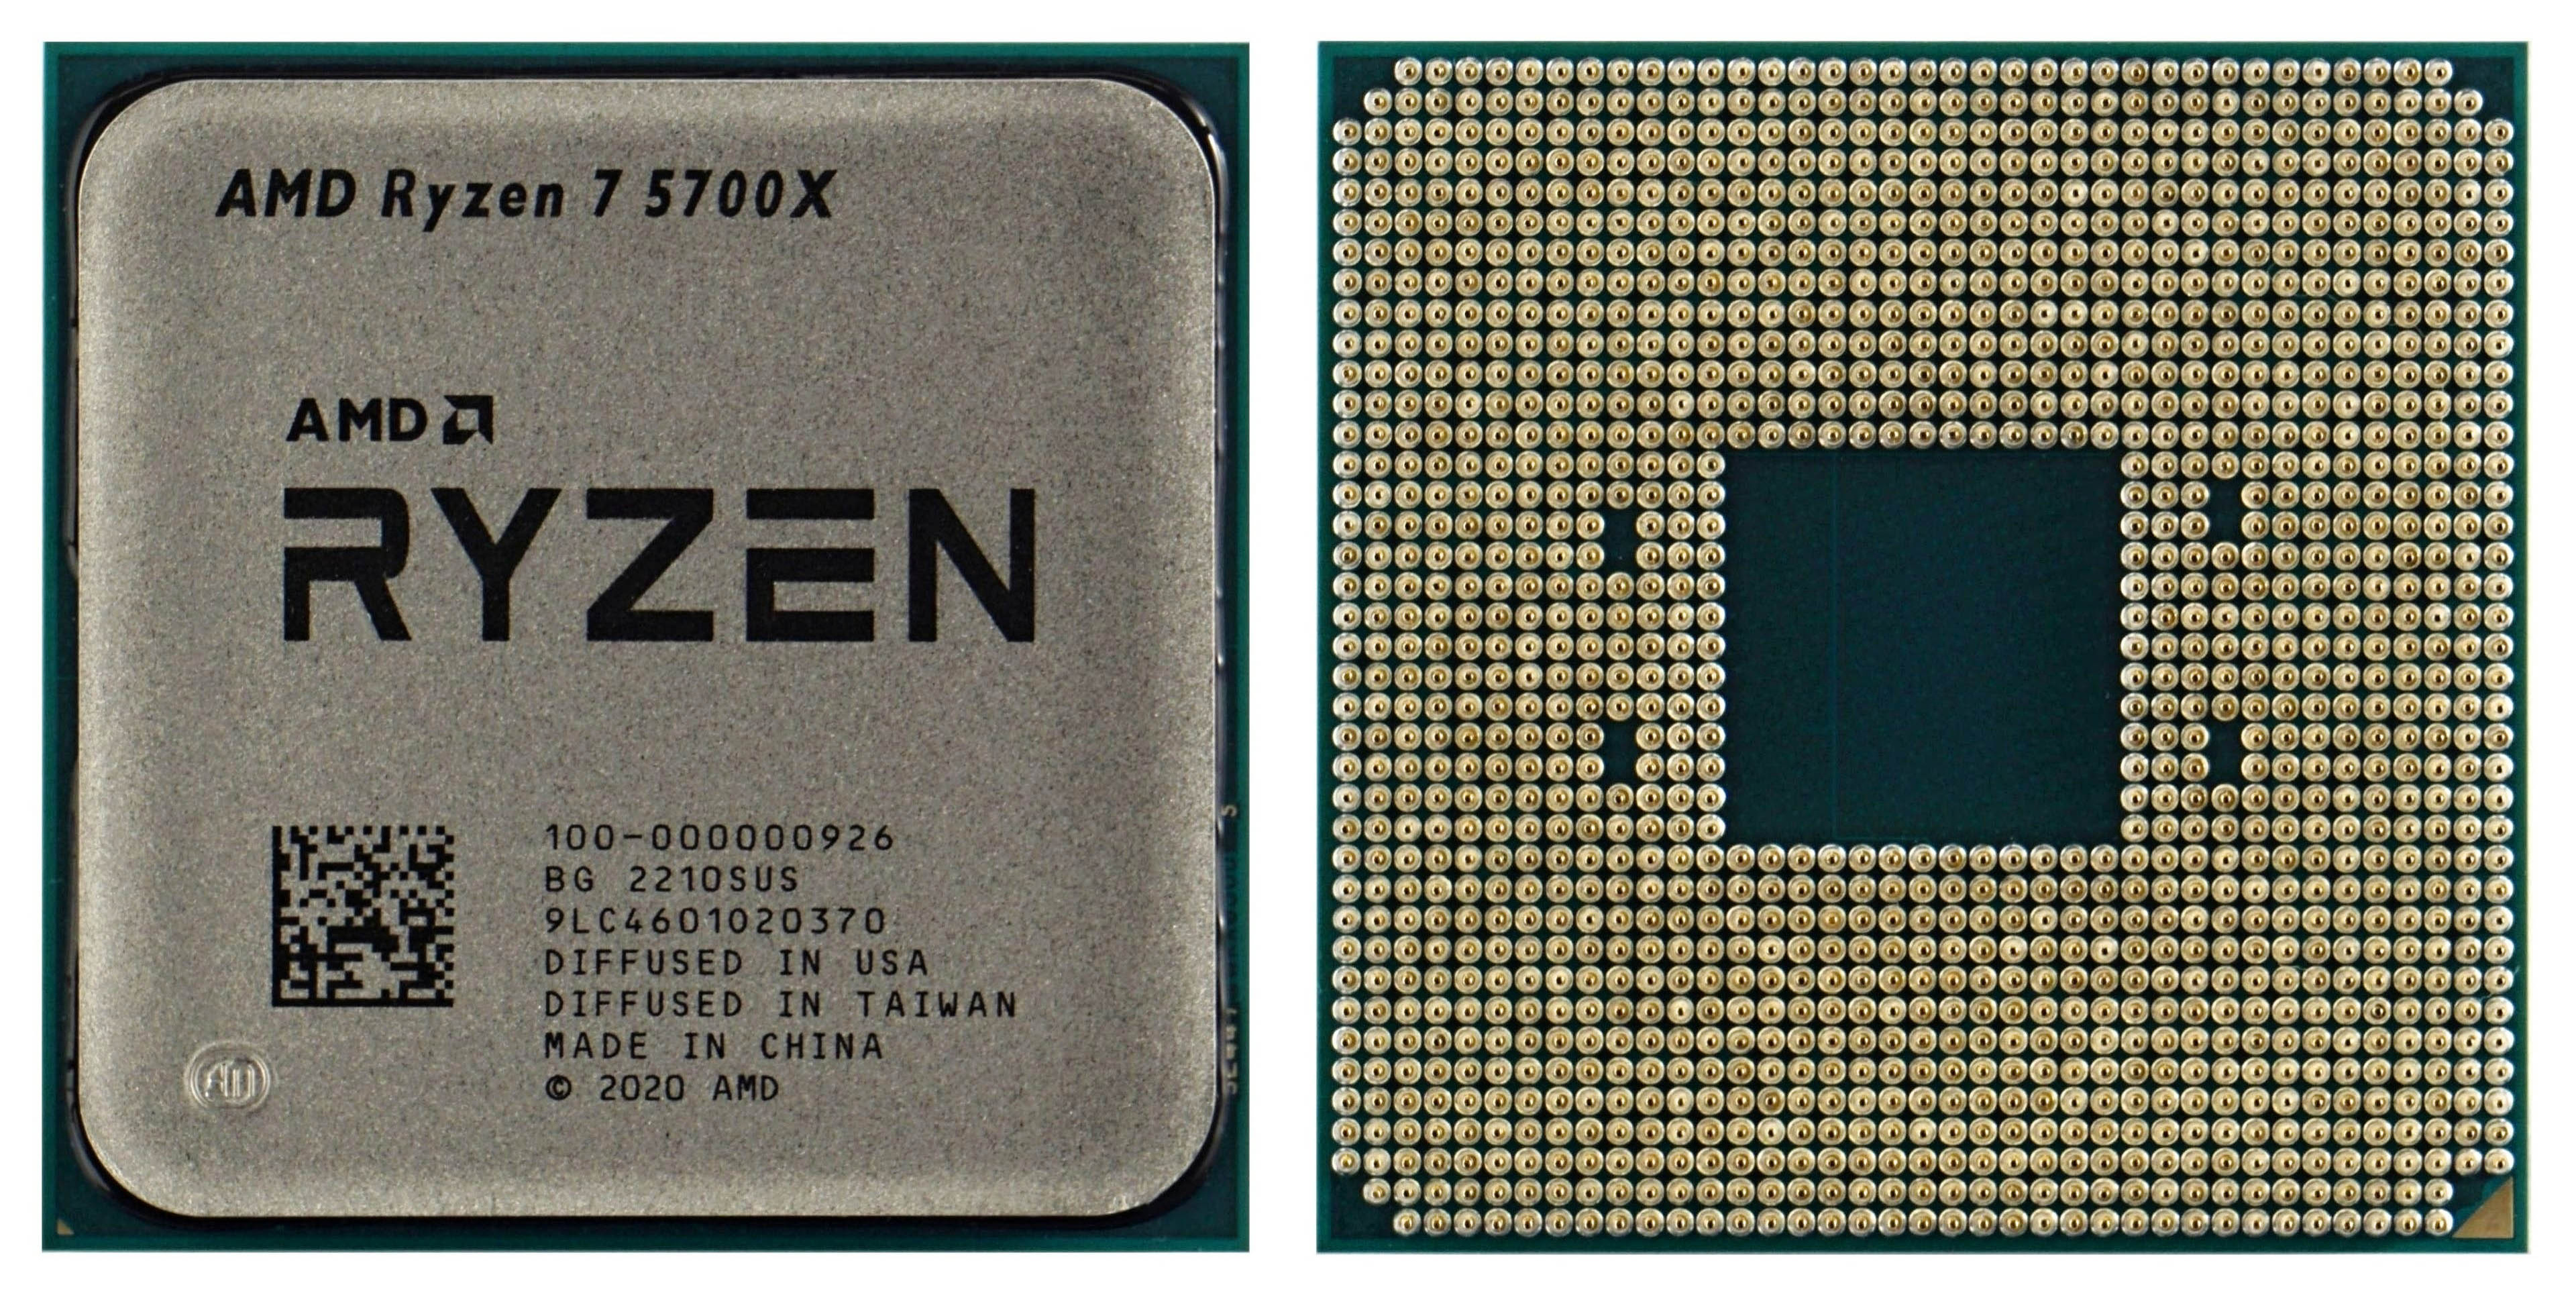 efficient the much than Ryzen AMD 7 5800X more A 5700X: CPU